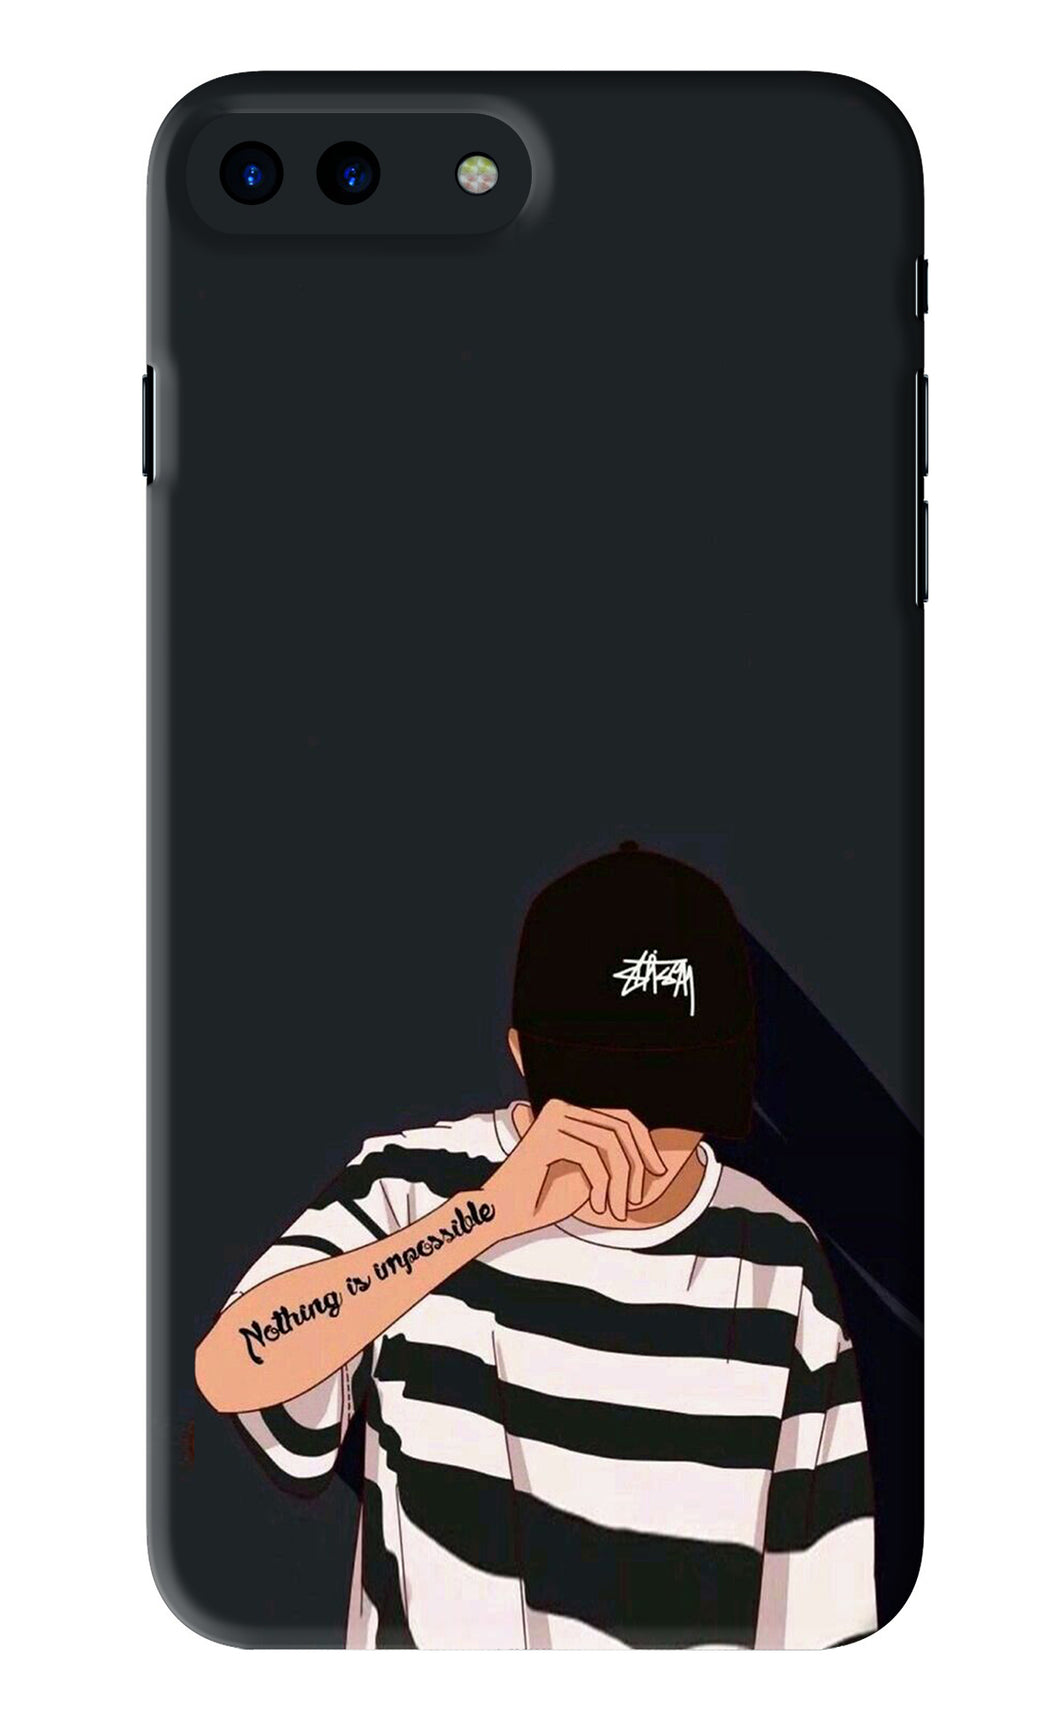 Aesthetic Boy iPhone 8 Plus Back Skin Wrap